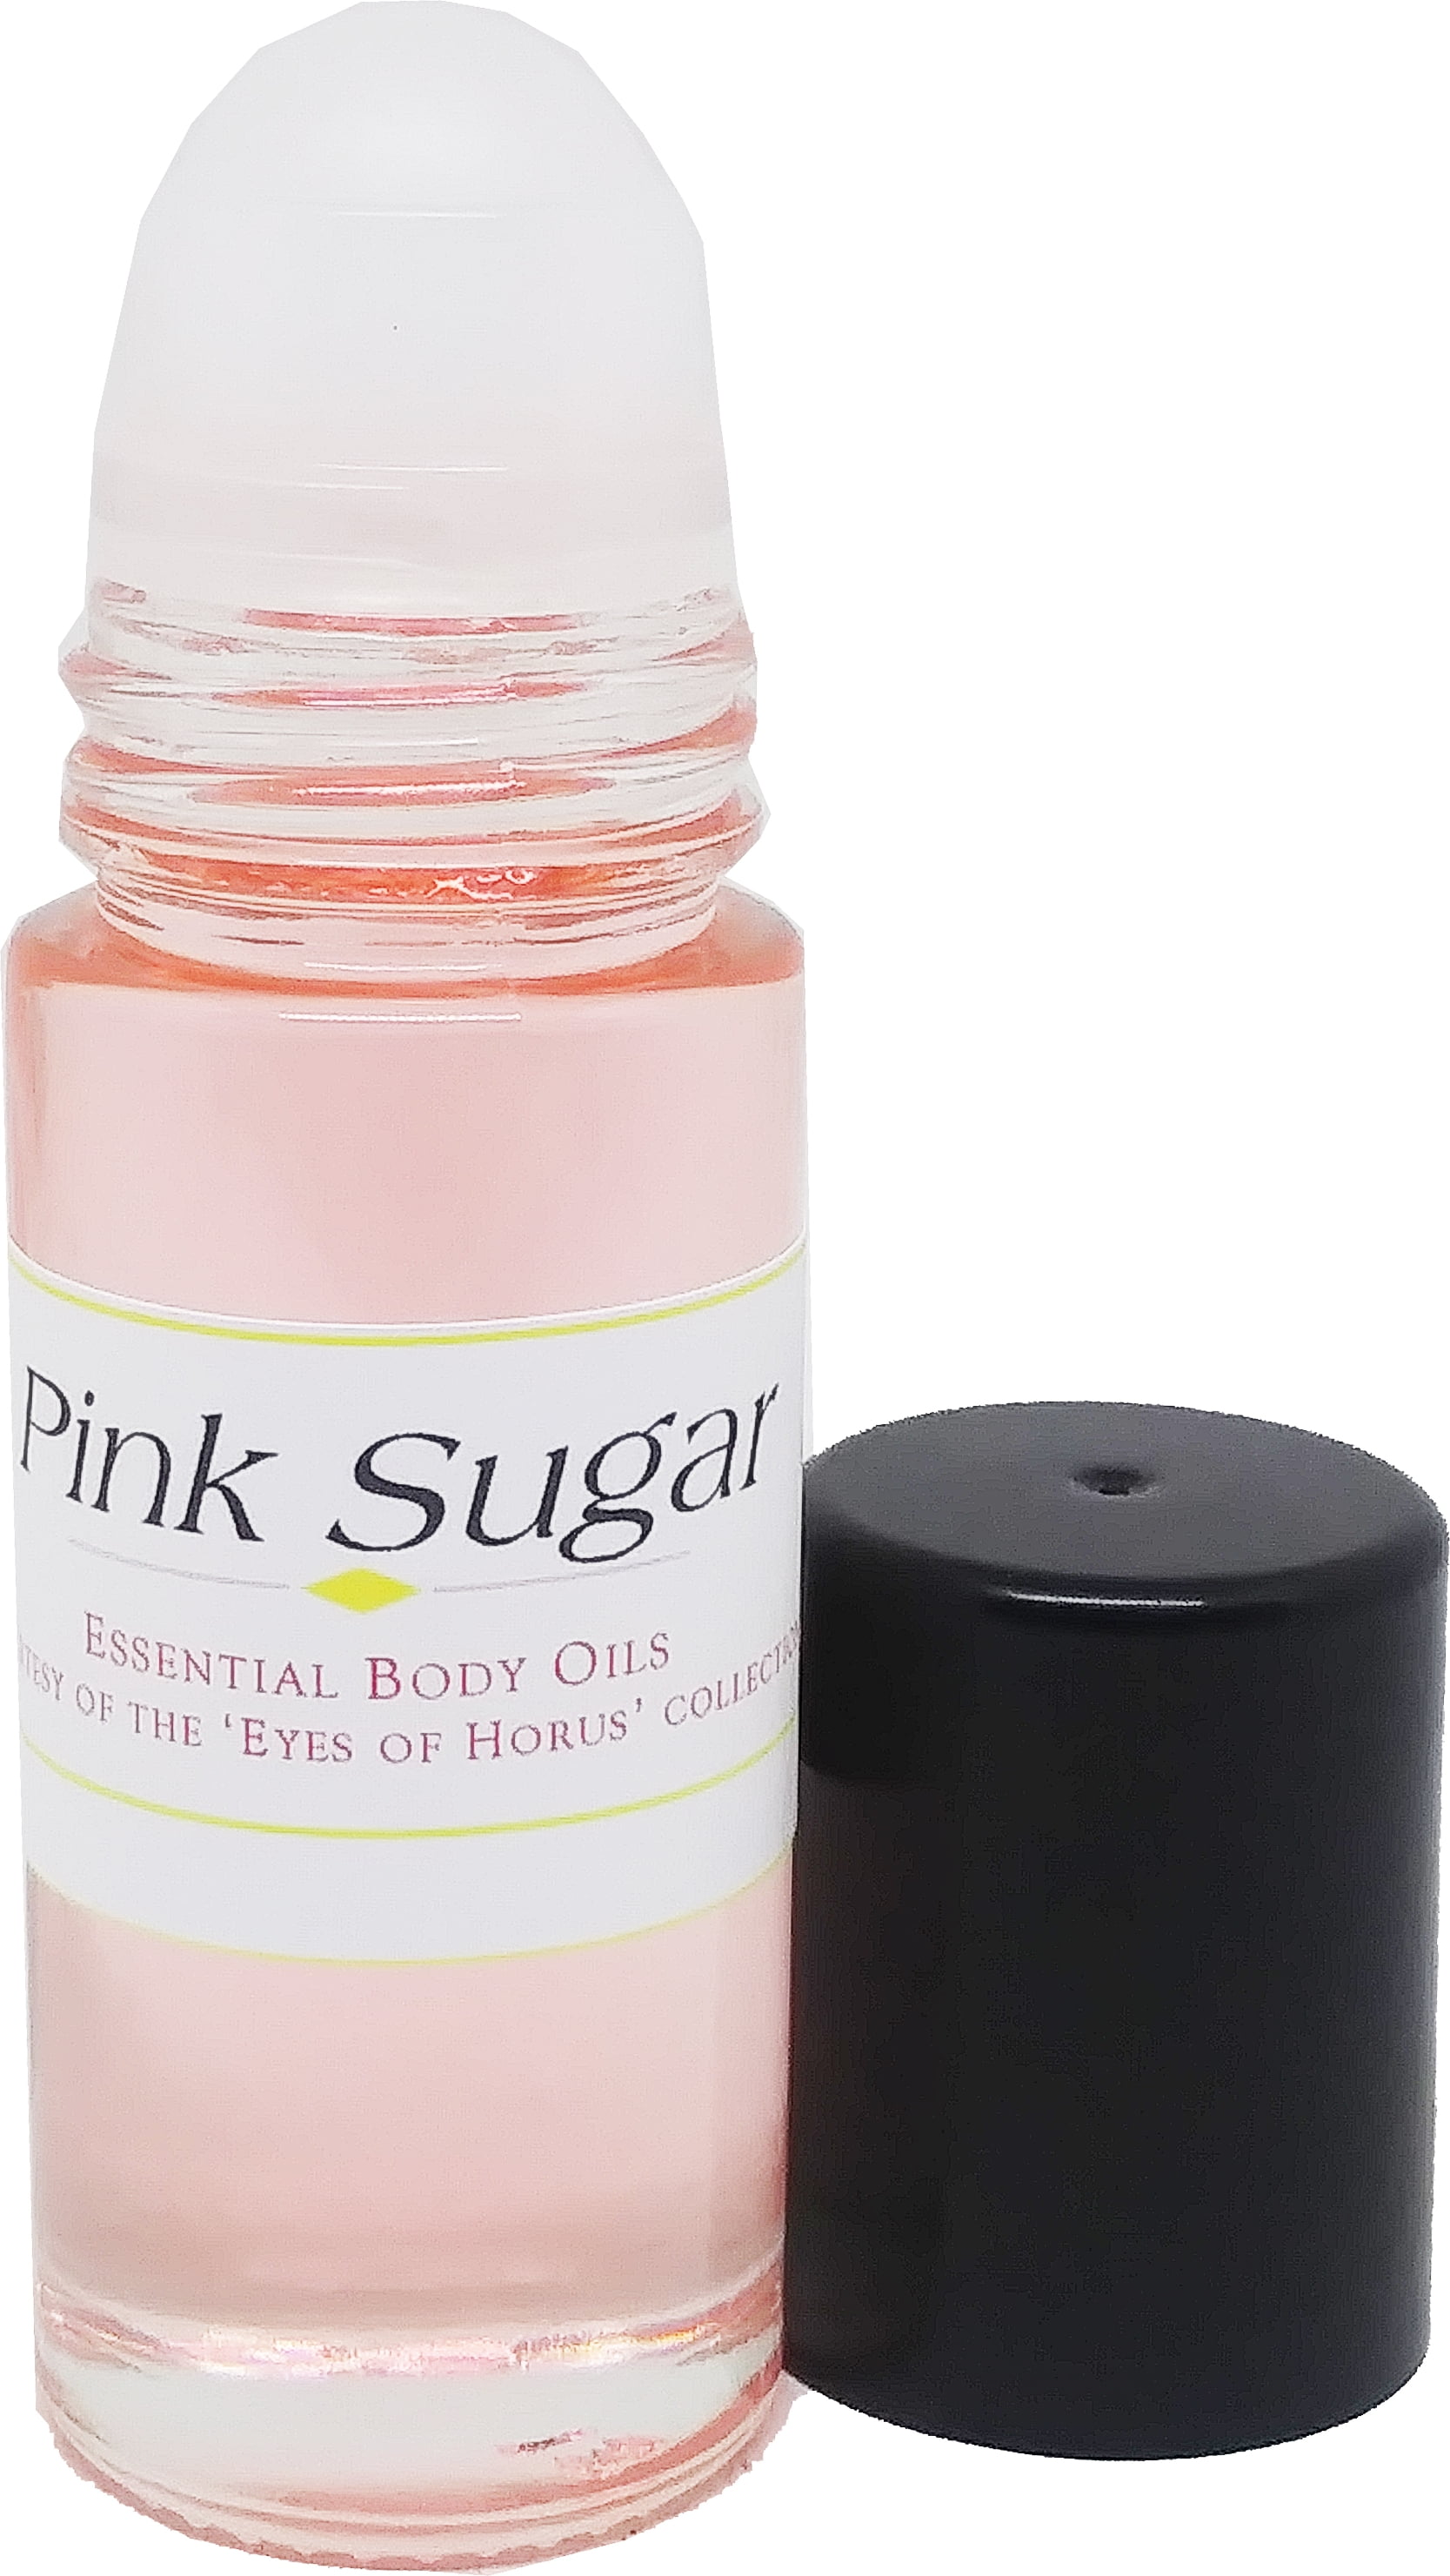  Pink Sugar 10ml. / .033 fl. oz. Roll-On Perfume I Skin Oil I  Our Interpretation Premium Quality I Uncut I Fragrance Oil I Skin Safe I  Add Aroma to your DIY